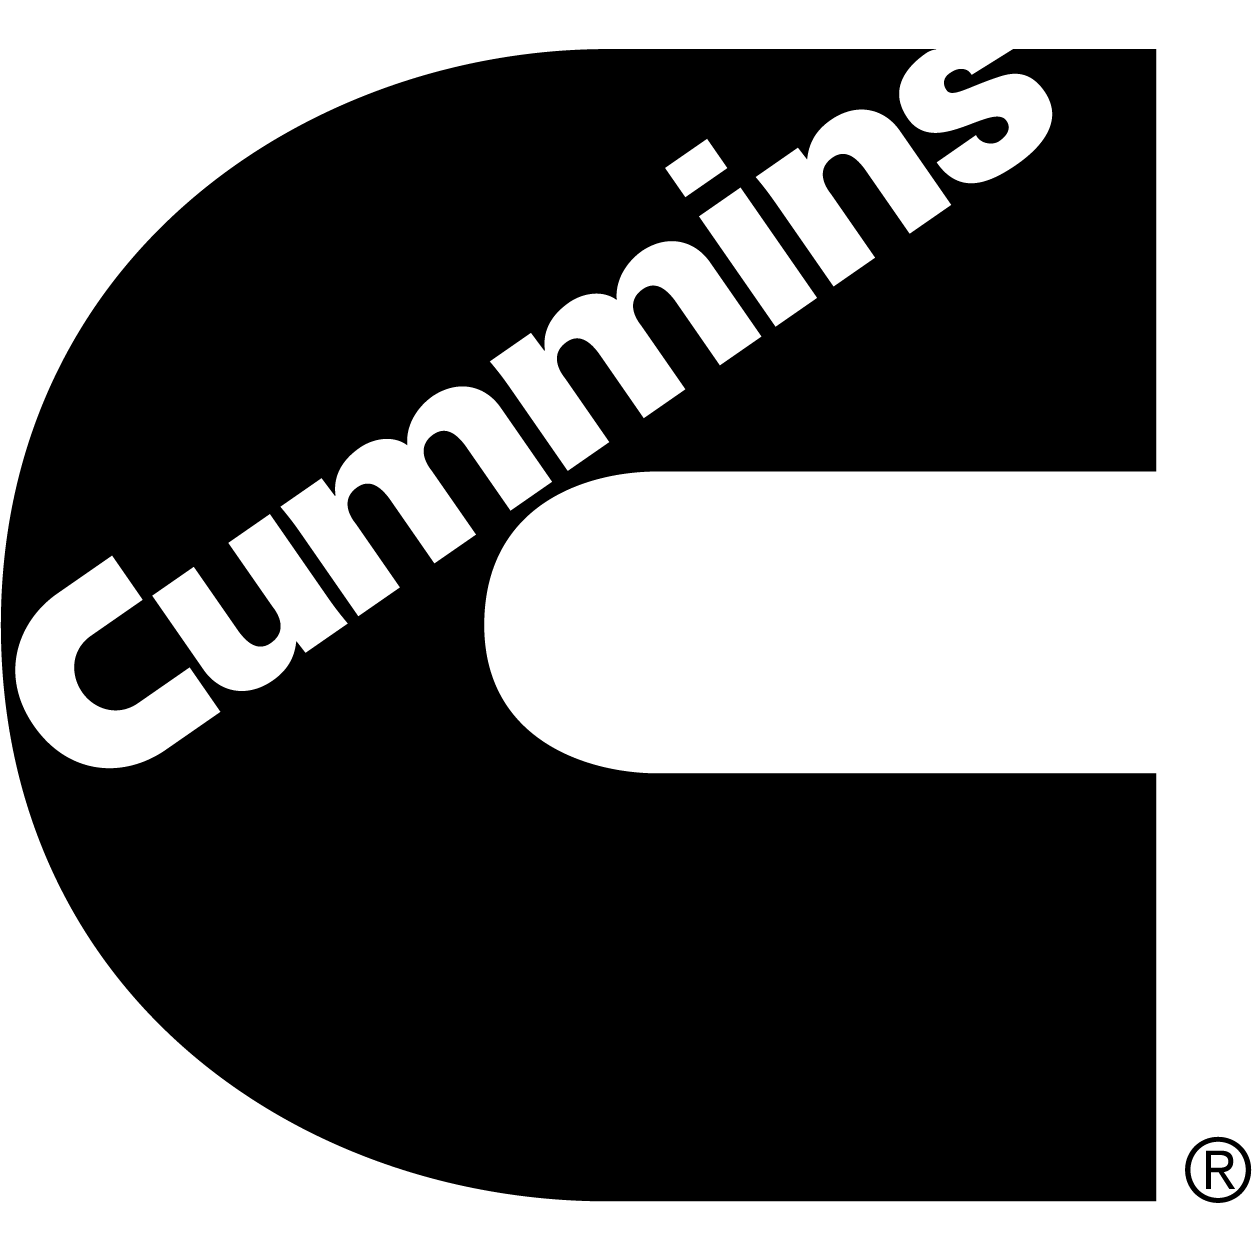 Cummins Sales and Service Logo